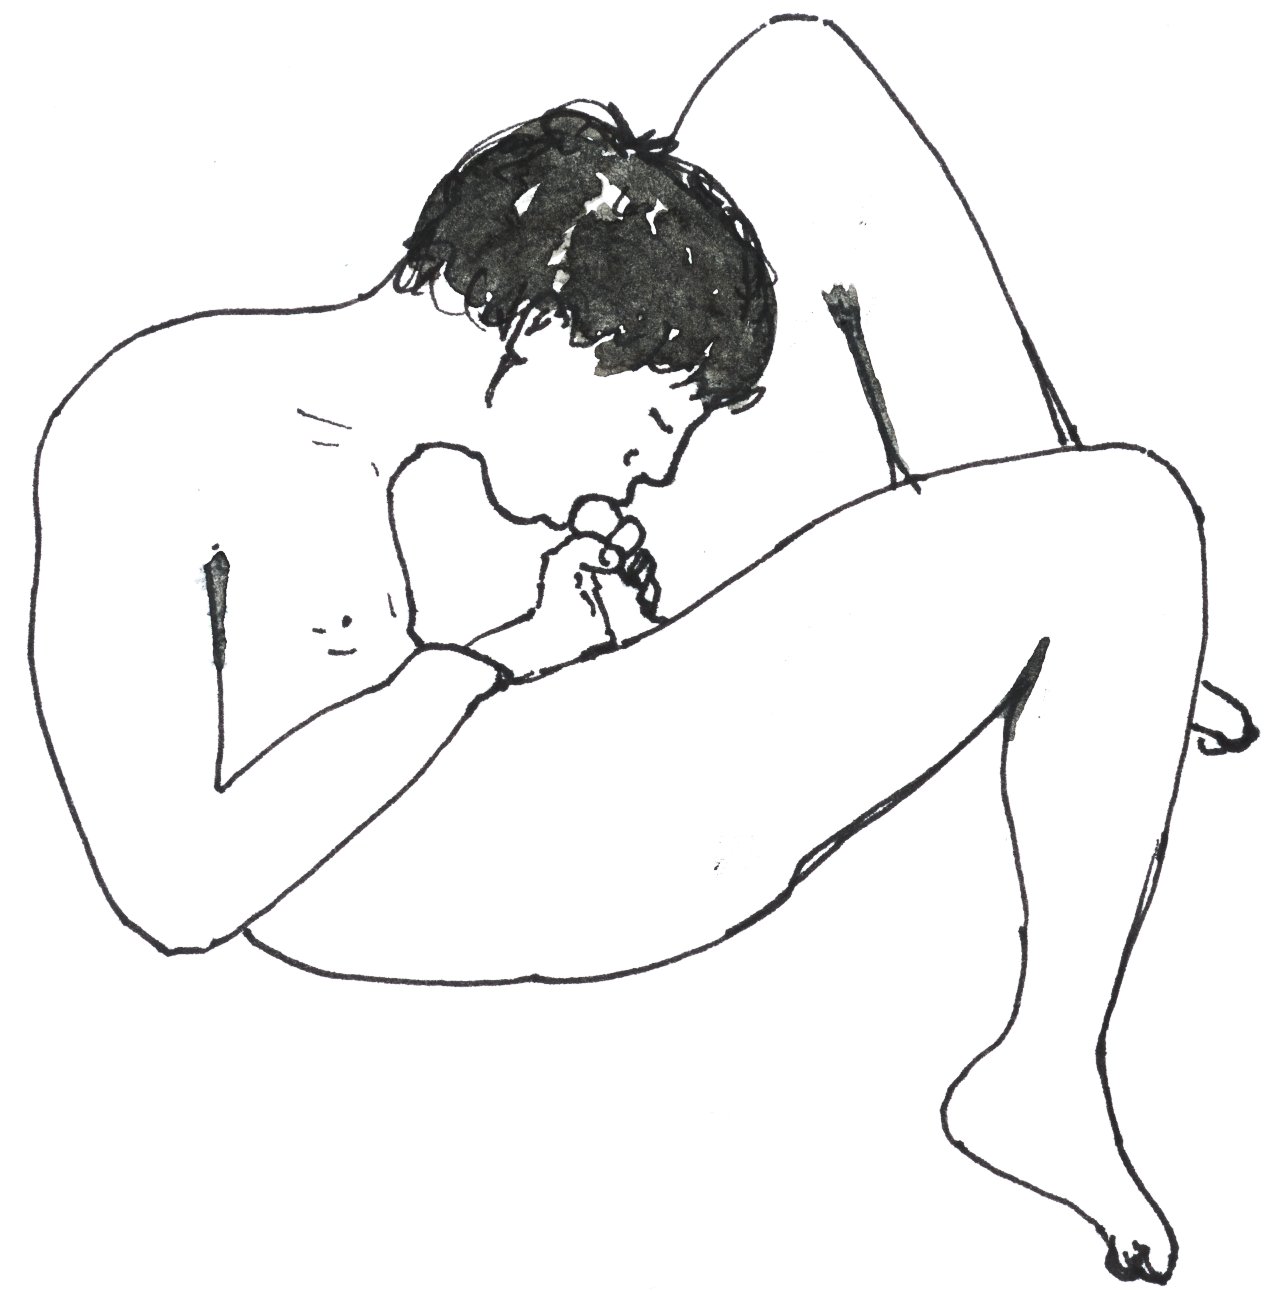 Male masturbation positions